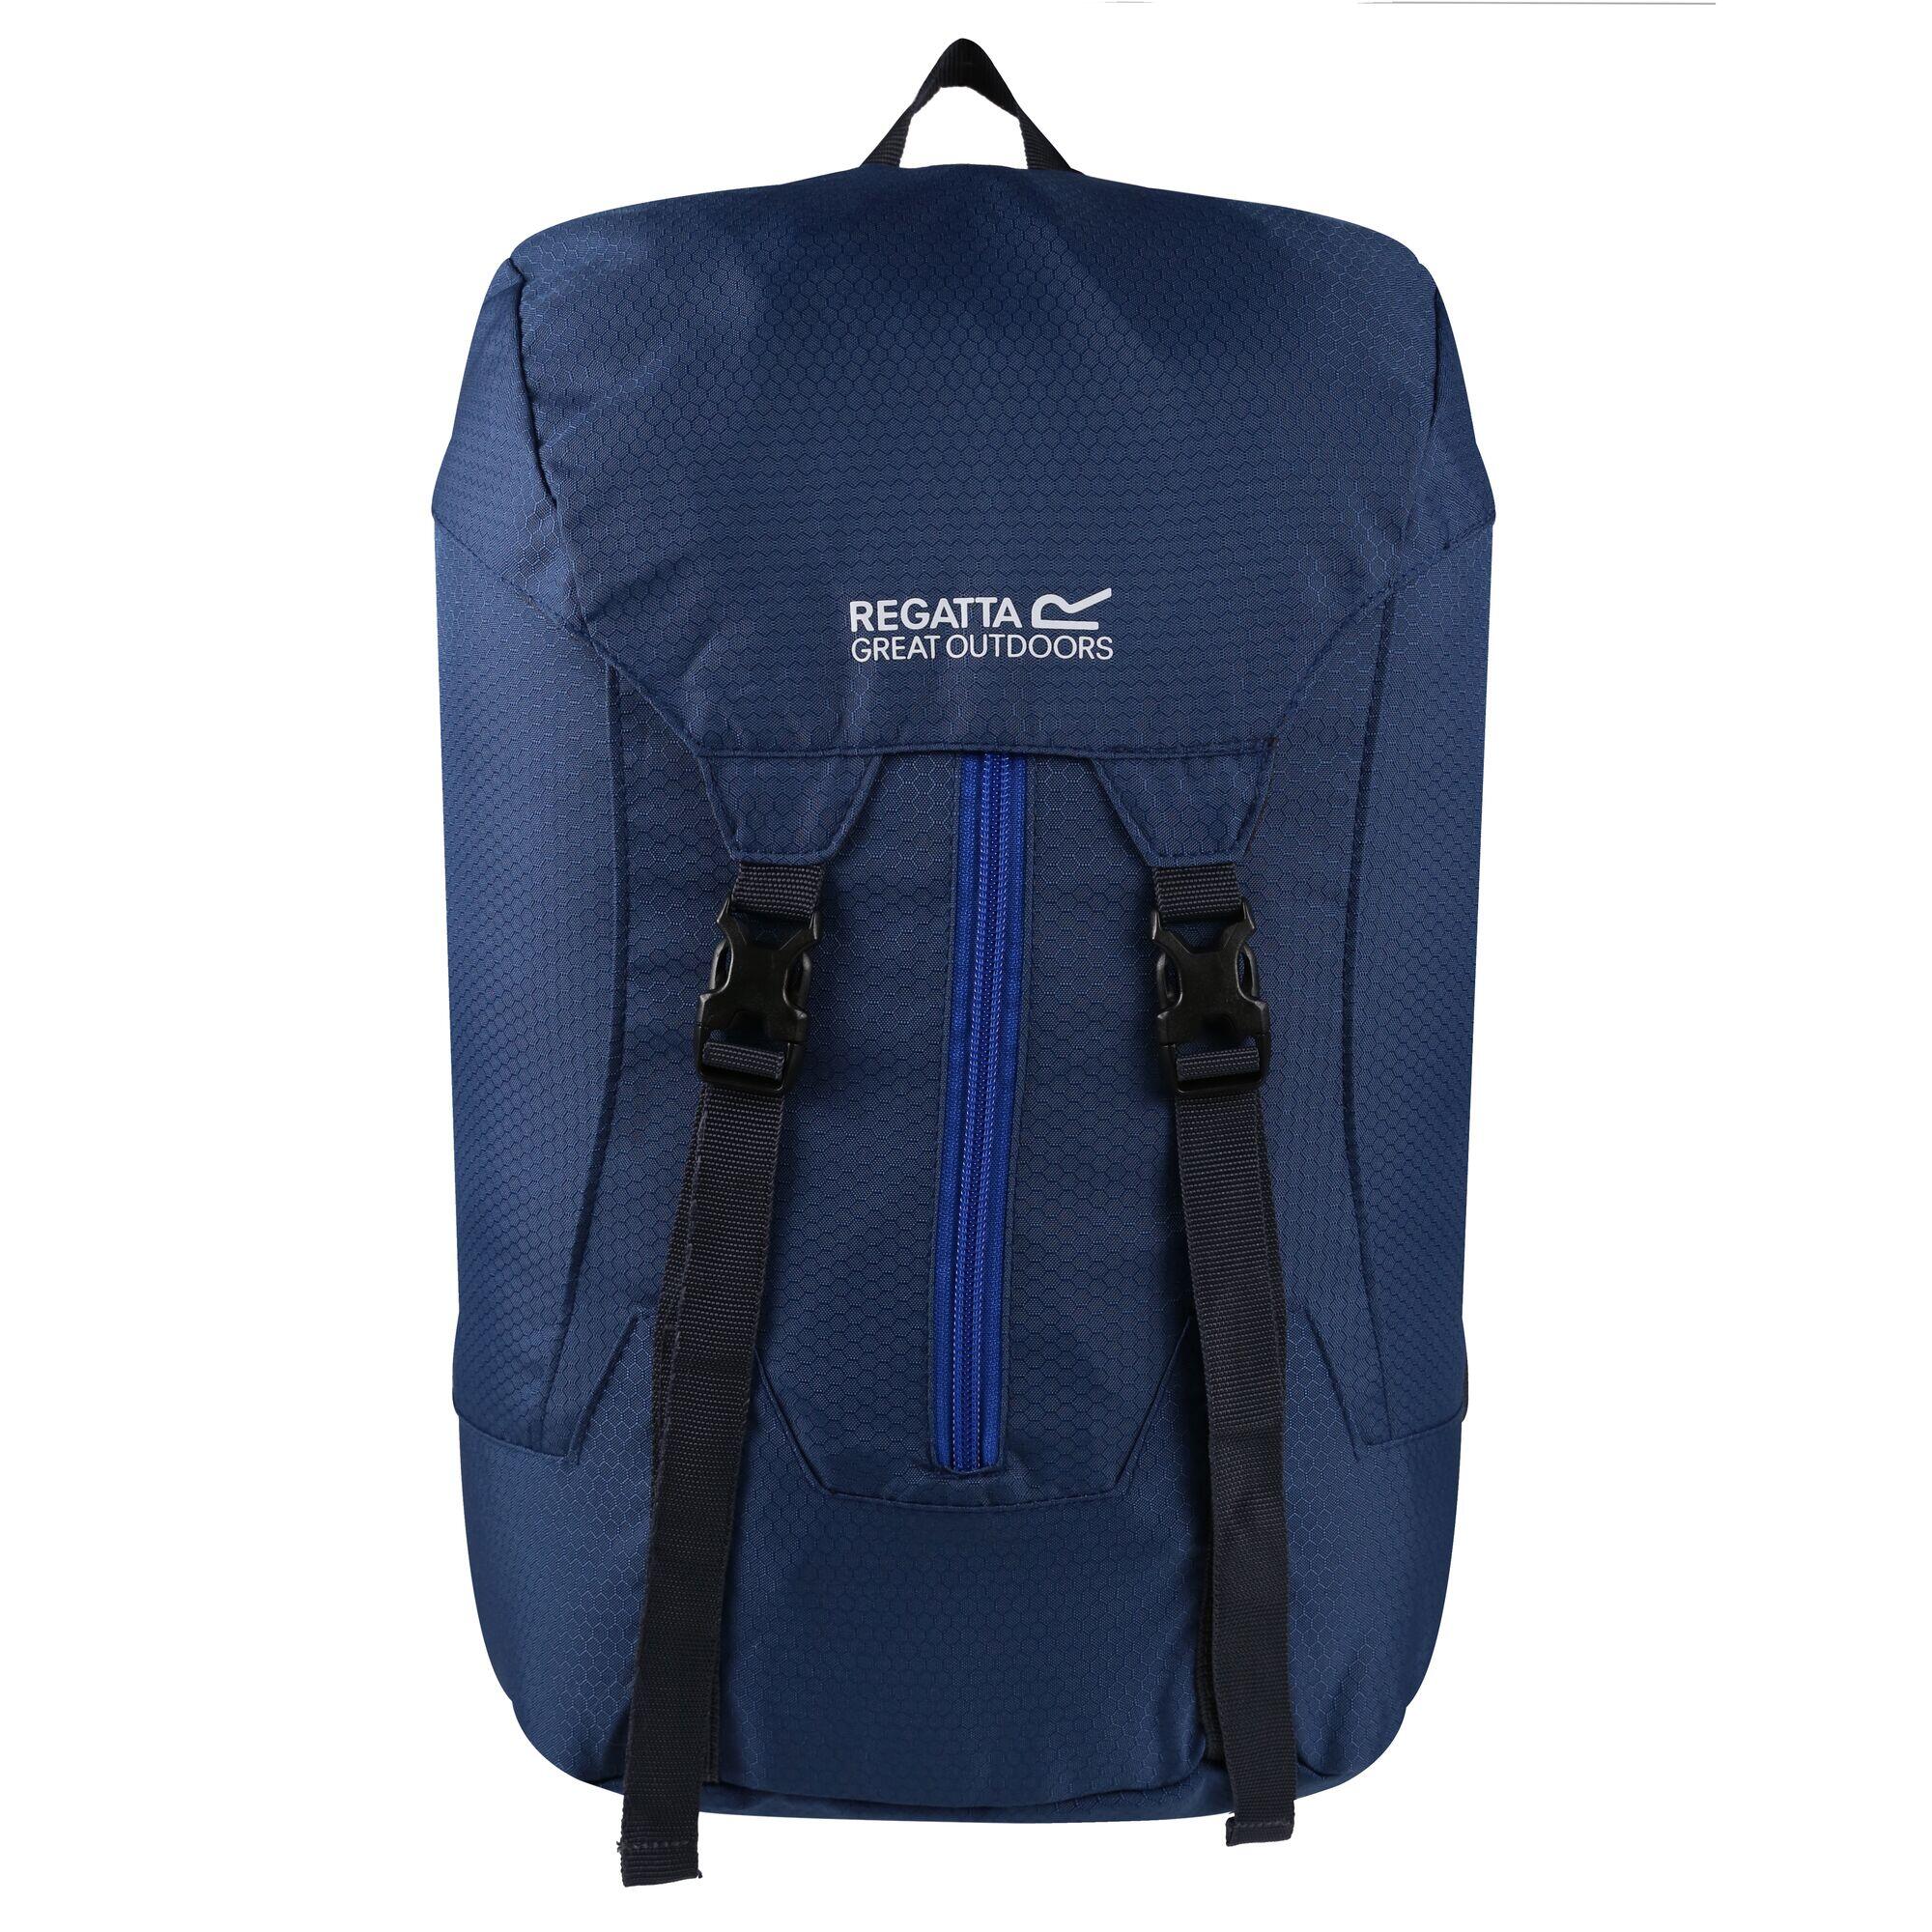 REGATTA Easypack Packaway 25L Adults' Unisex Hiking Rucksack - Dark Denim Nautical Blue